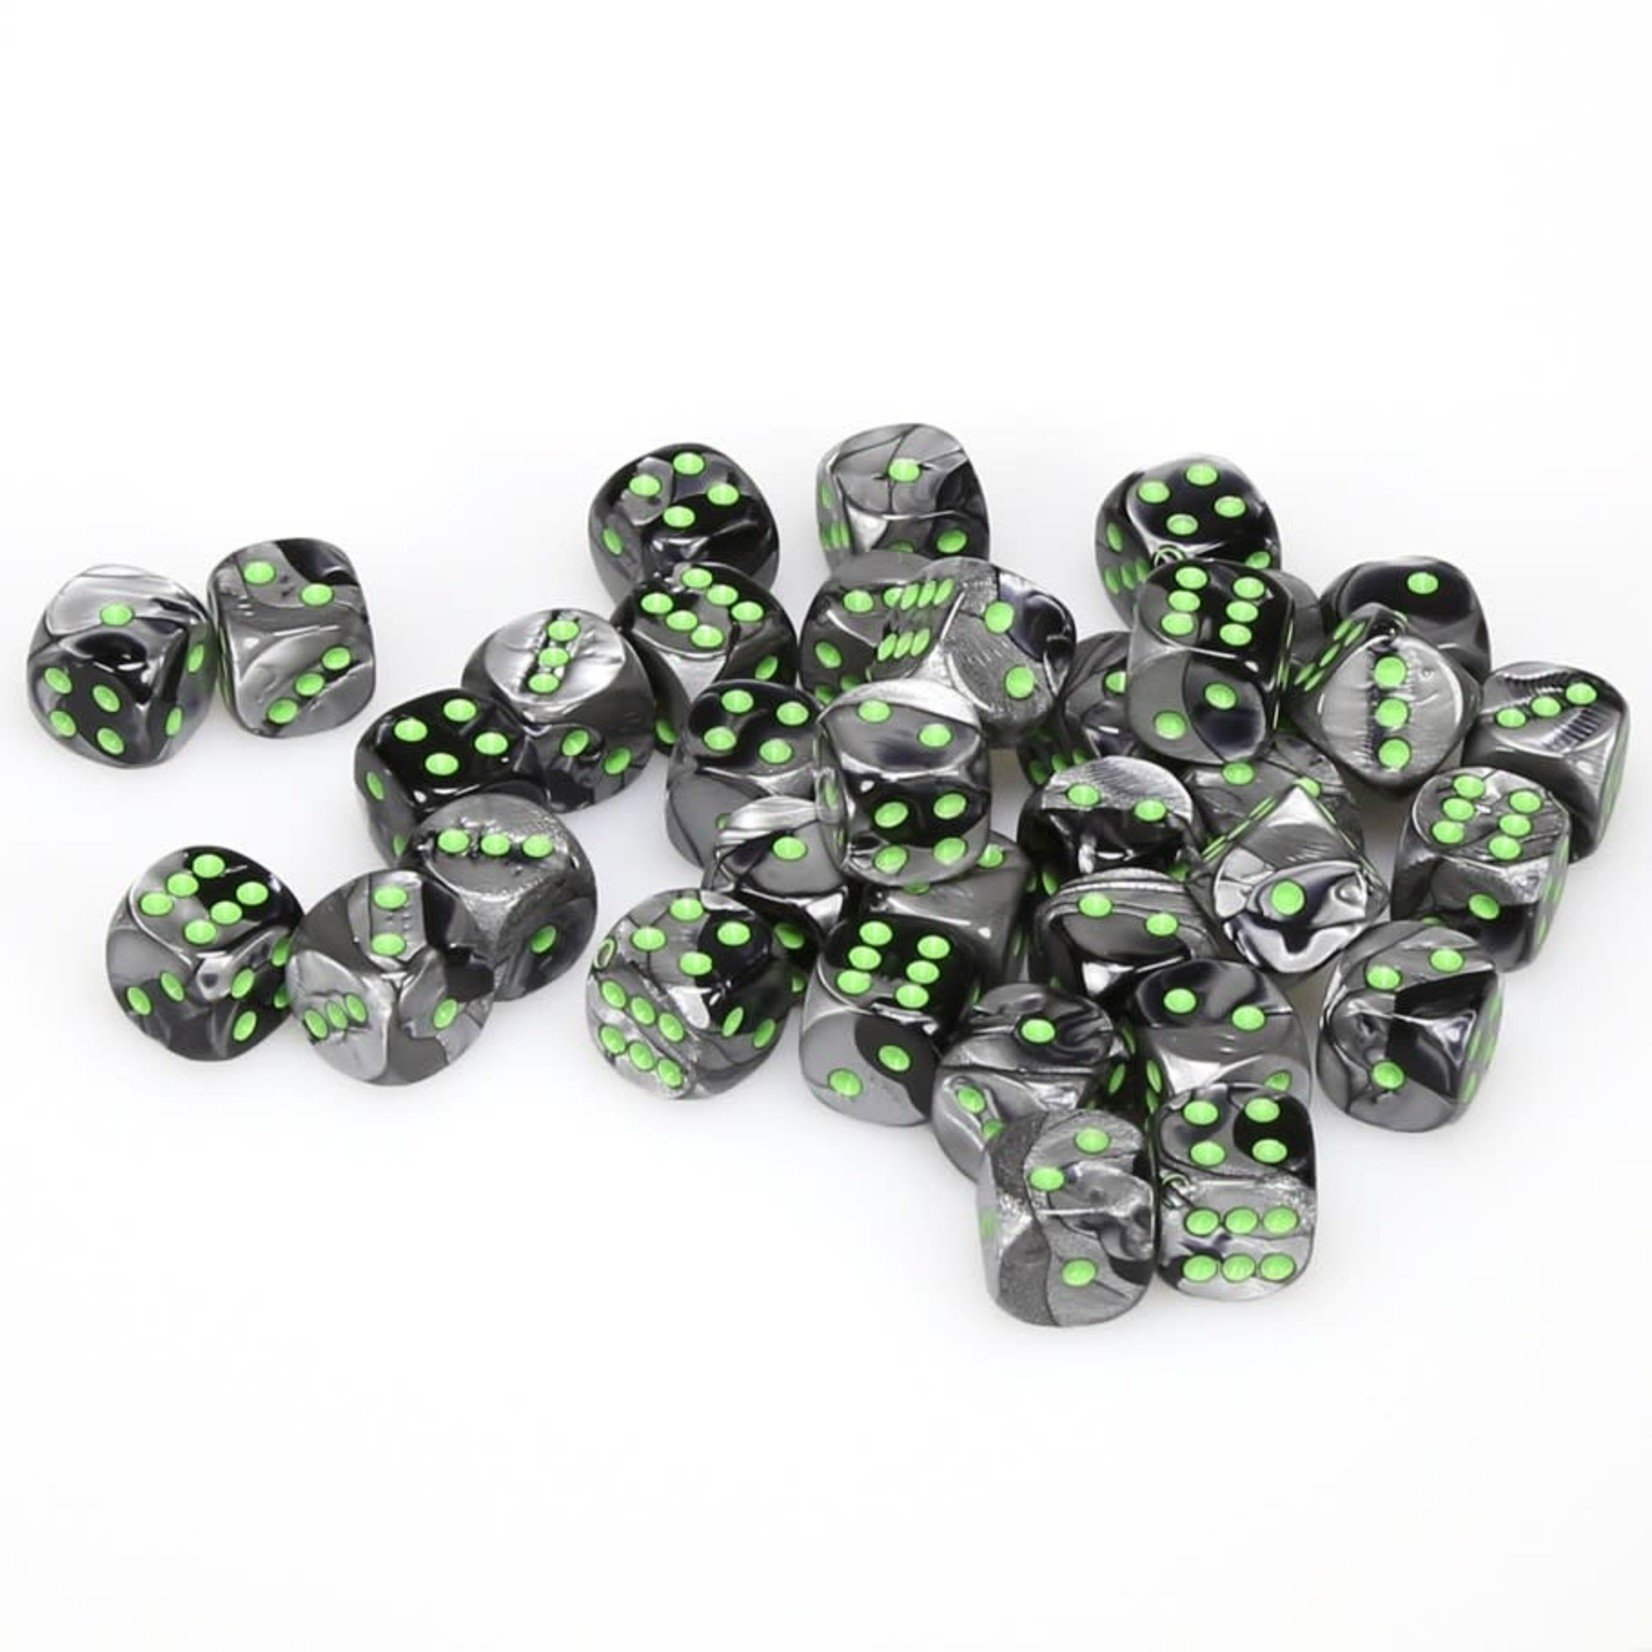 Chessex Chessex Gemini Black / Grey with Green 12 mm d6 36 die set